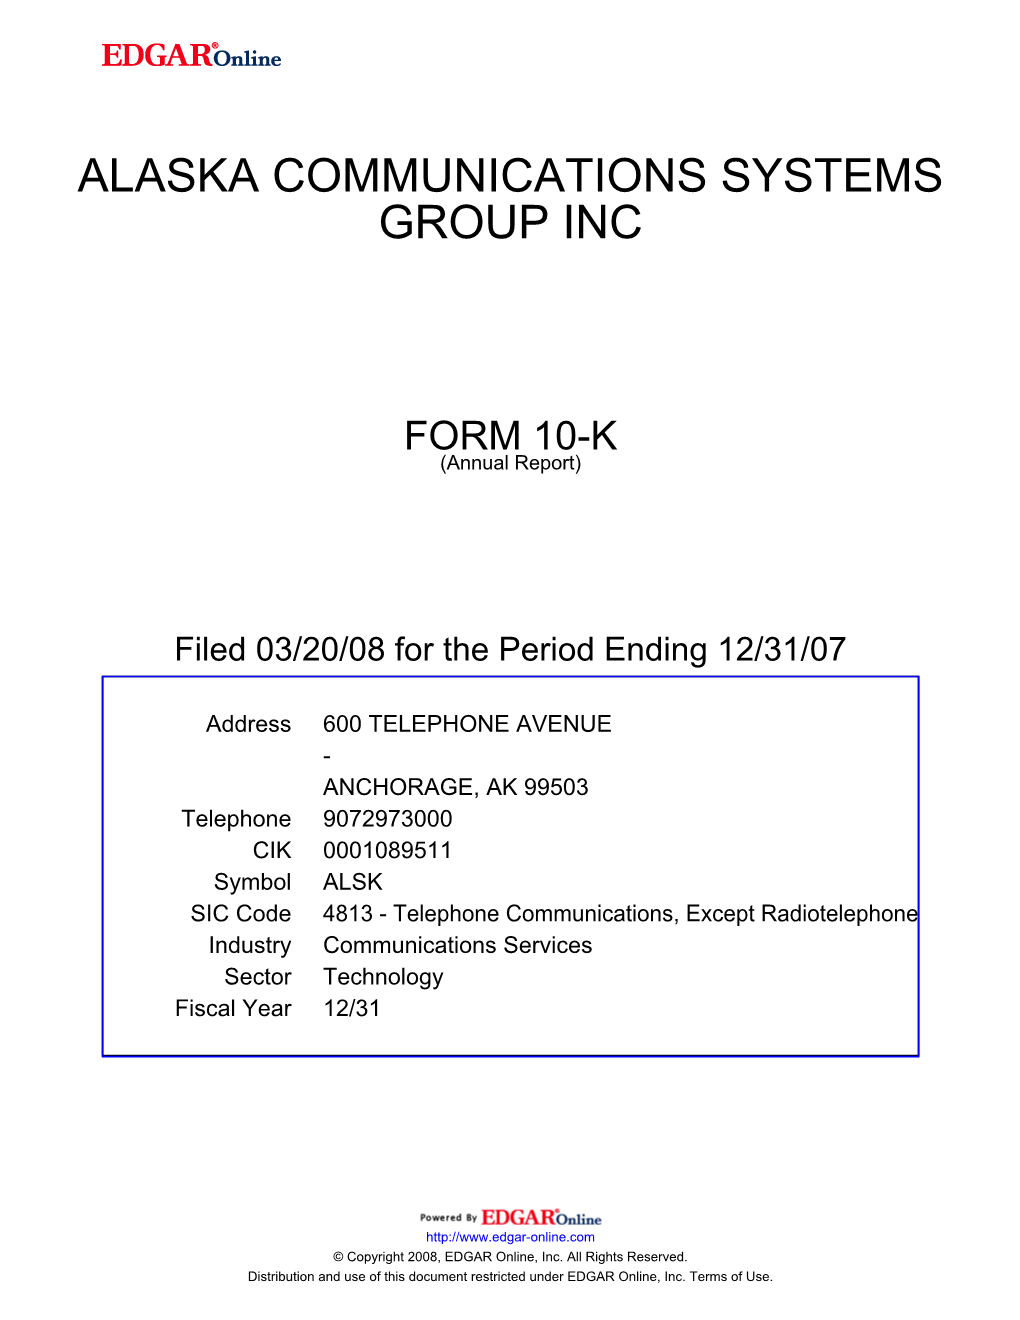 Alaska Communications Systems Group Inc